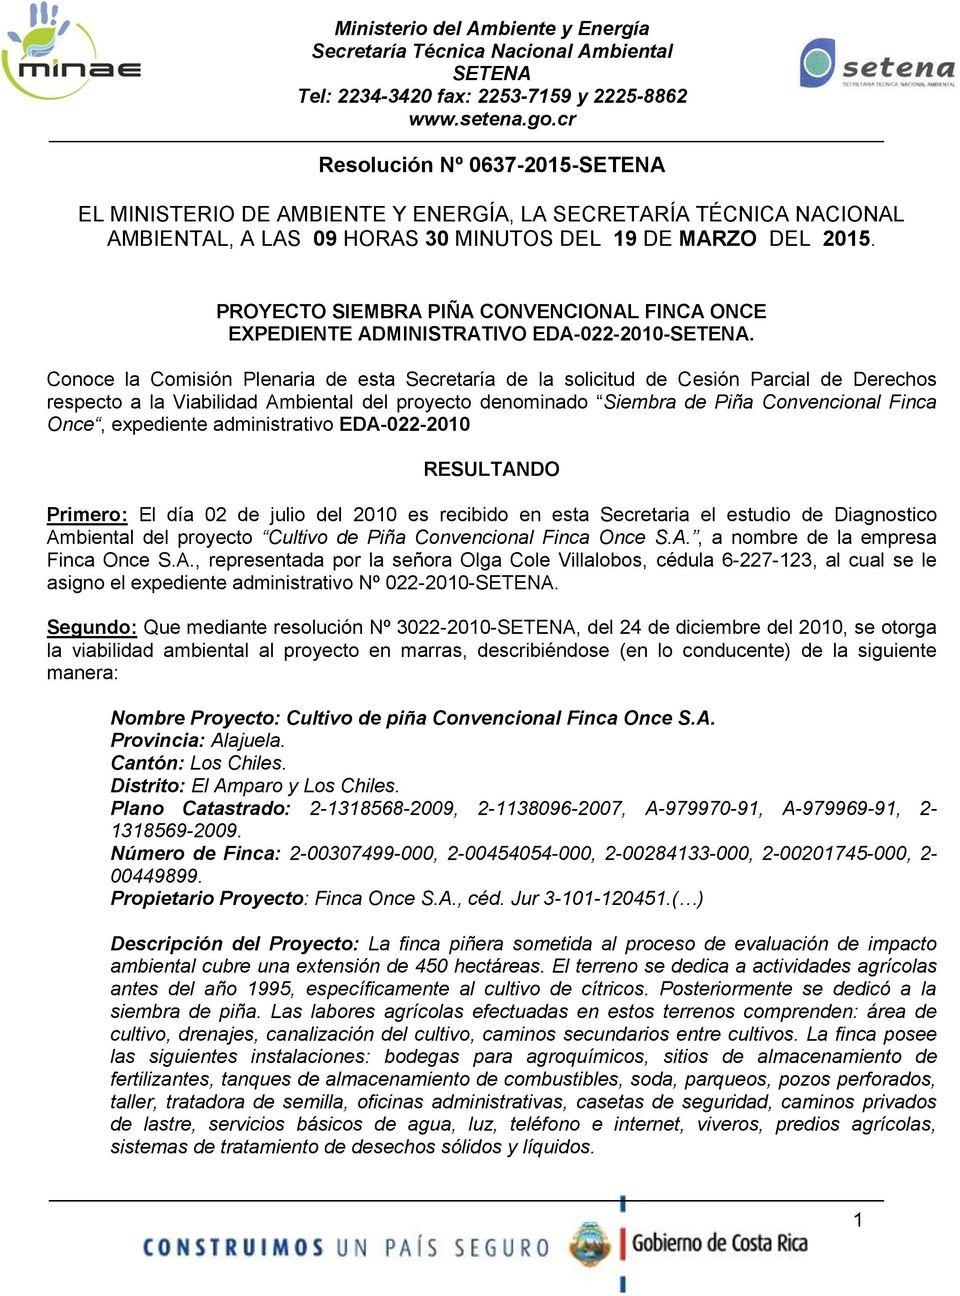 PROYECTO SIEMBRA PIÑA CONVENCIONAL FINCA ONCE EXPEDIENTE ADMINISTRATIVO EDA-022-2010-SETENA.